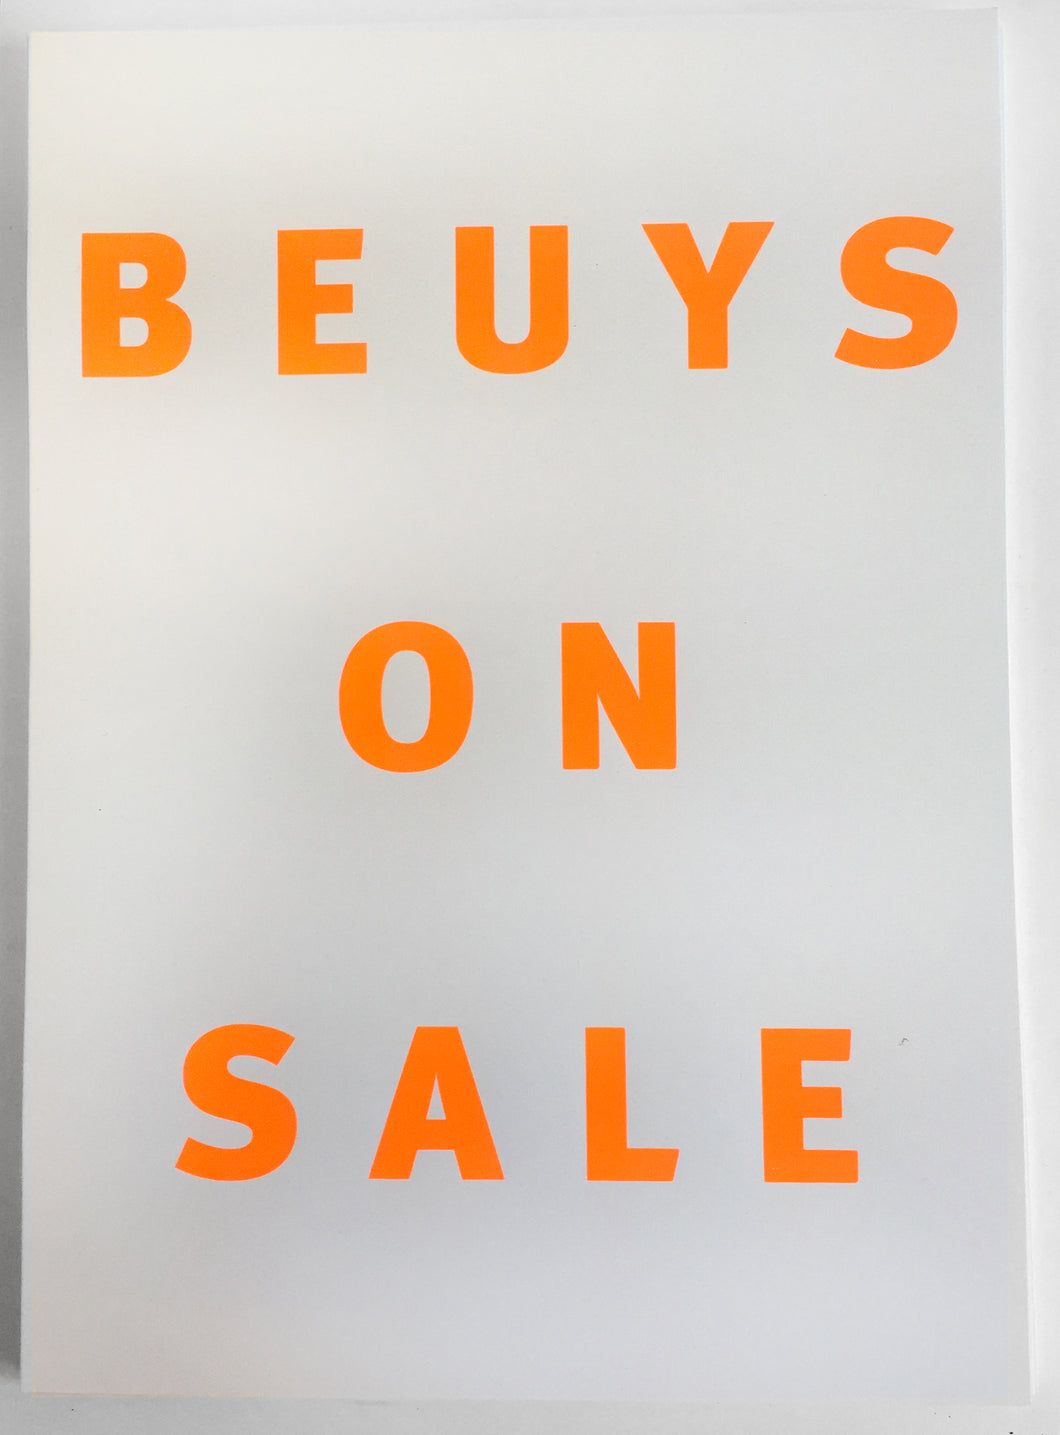 Beuys on Sale screen print | Gfeller & Hellsgård